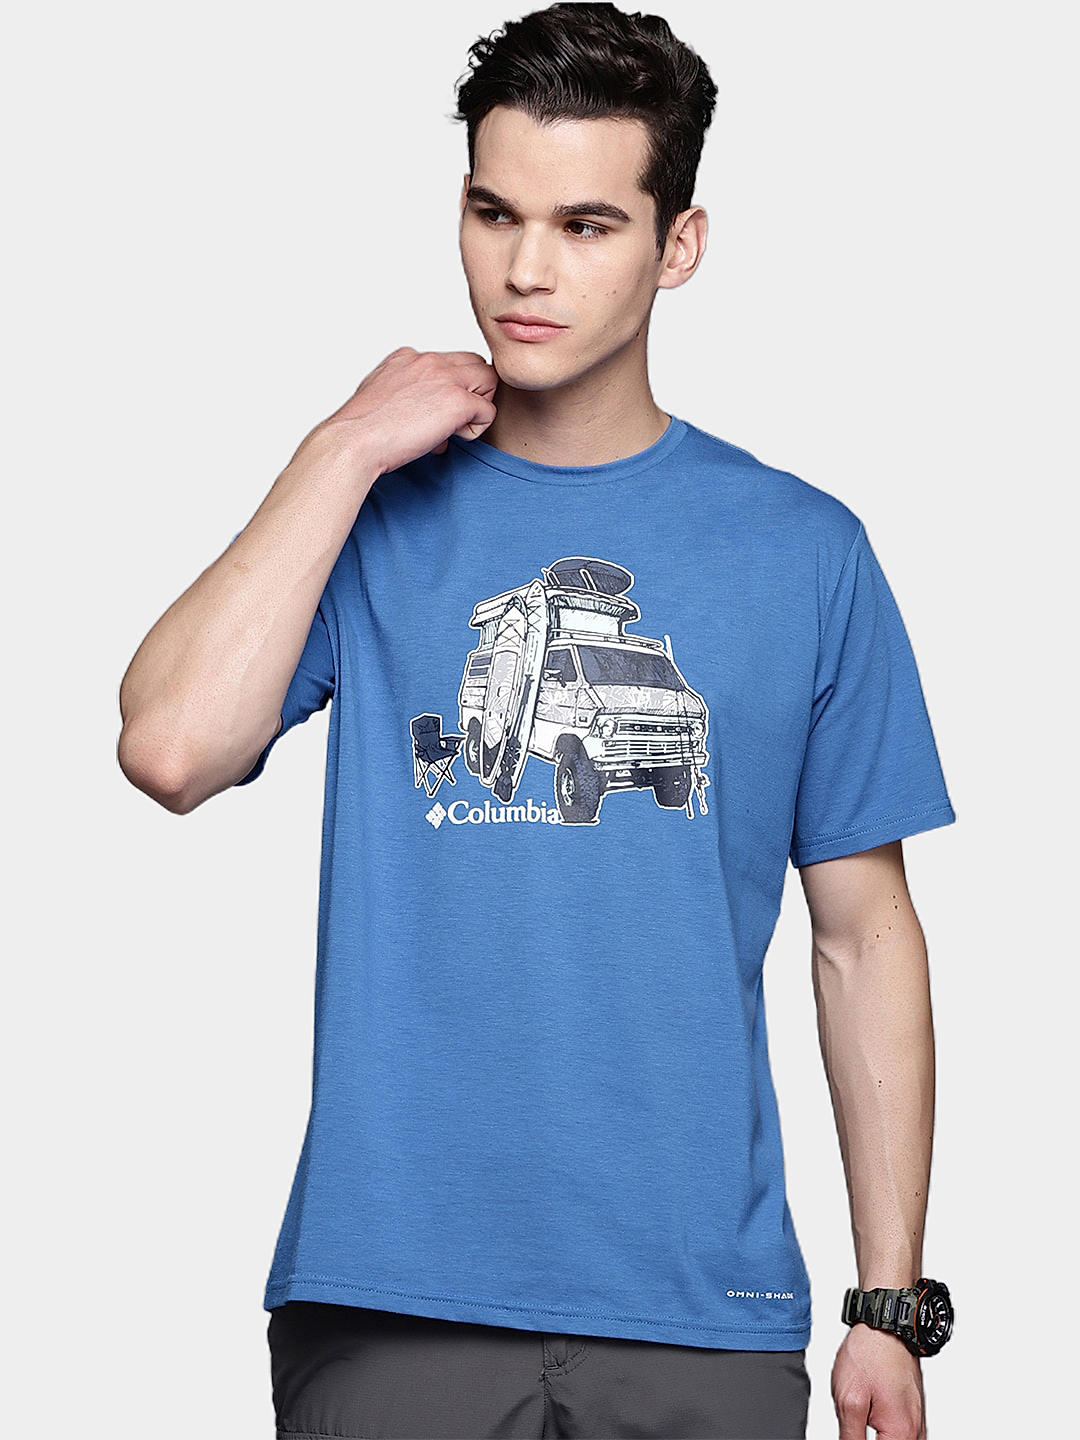 Columbia Sportswear Printed Men Round Neck Blue T-shirt